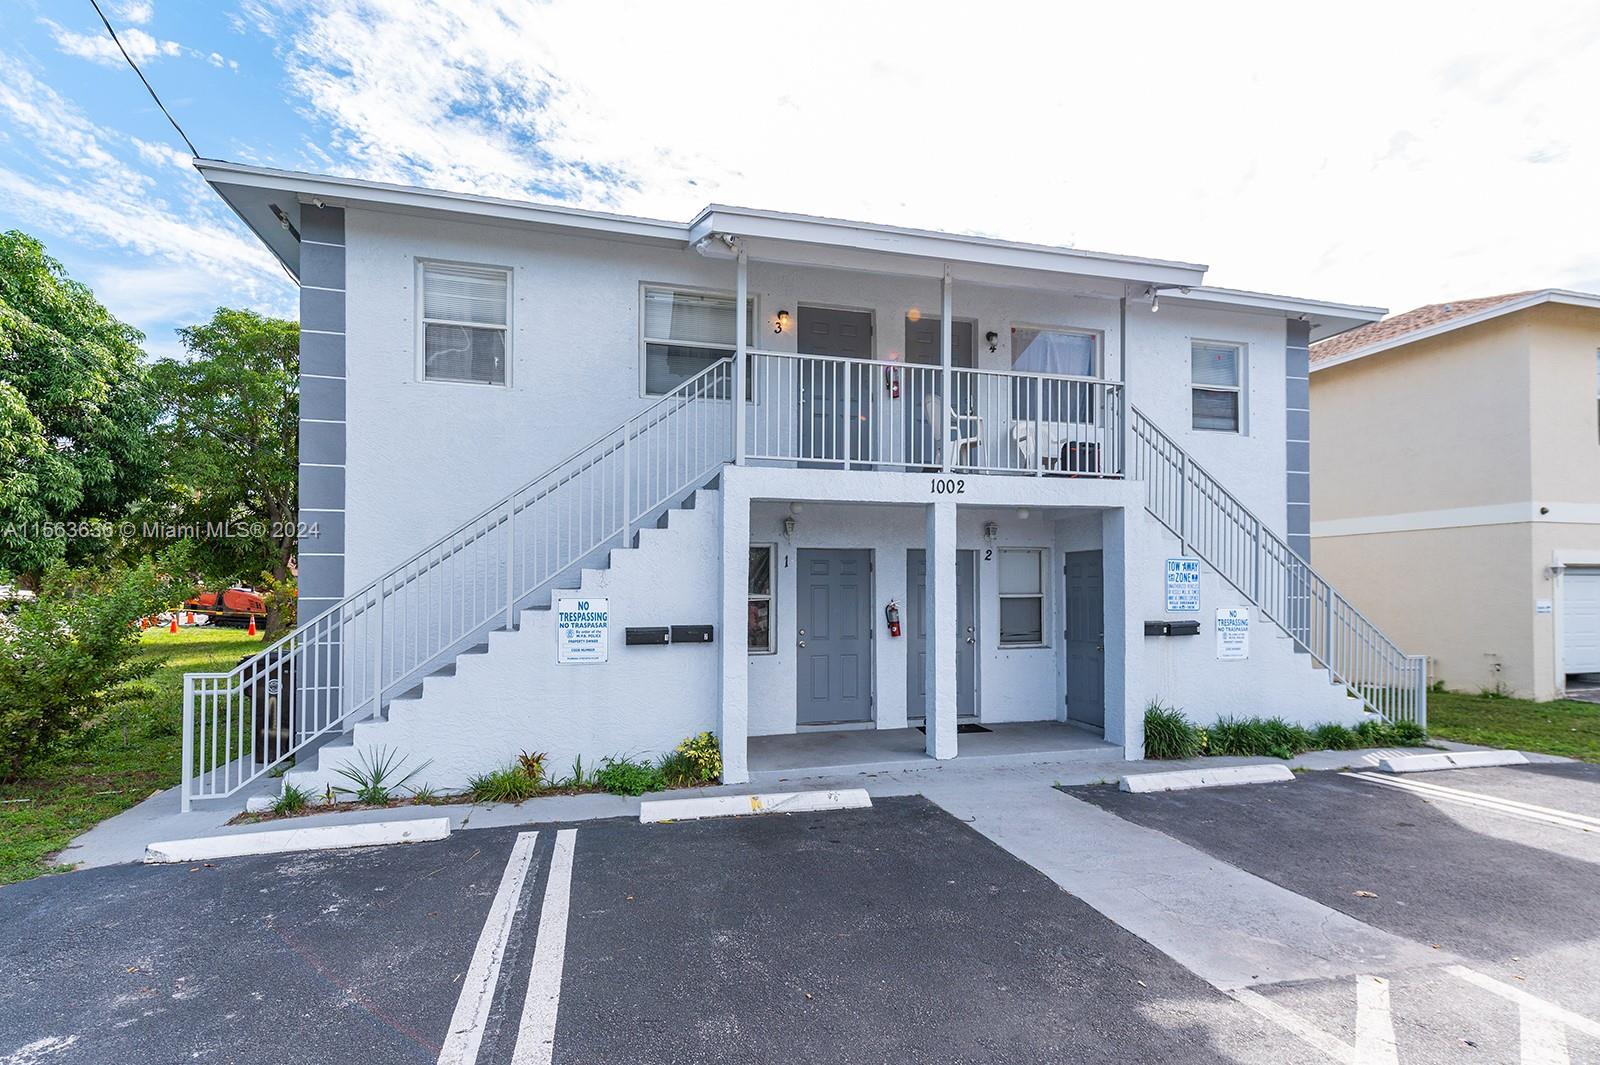 Rental Property at 1002 Palm Beach Lakes Blvd 2, West Palm Beach, Palm Beach County, Florida - Bedrooms: 2 
Bathrooms: 1  - $1,550 MO.